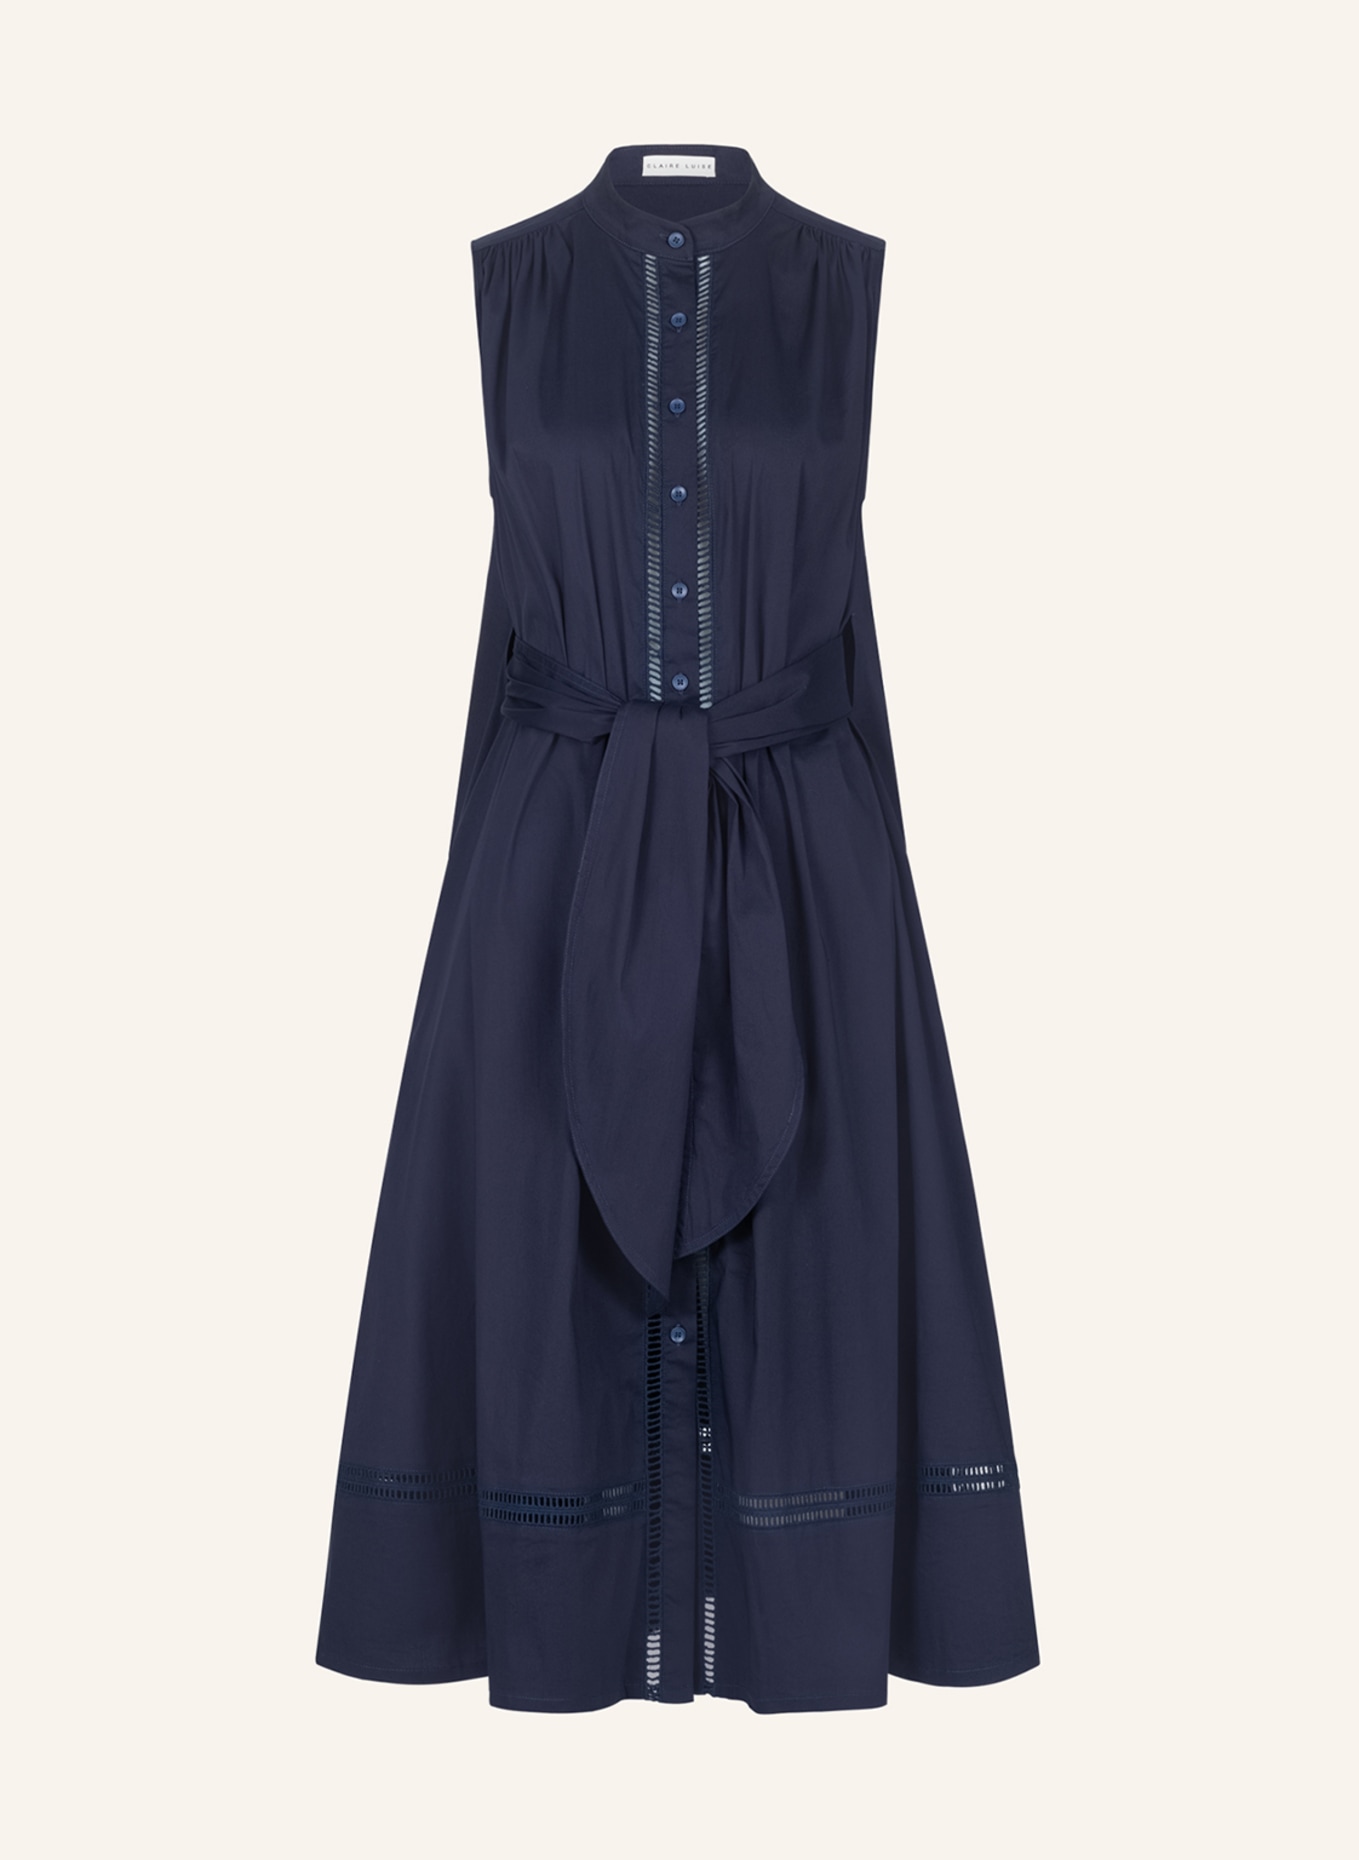 CLAIRE LUISE Kleid, Farbe: BLAU (Bild 1)